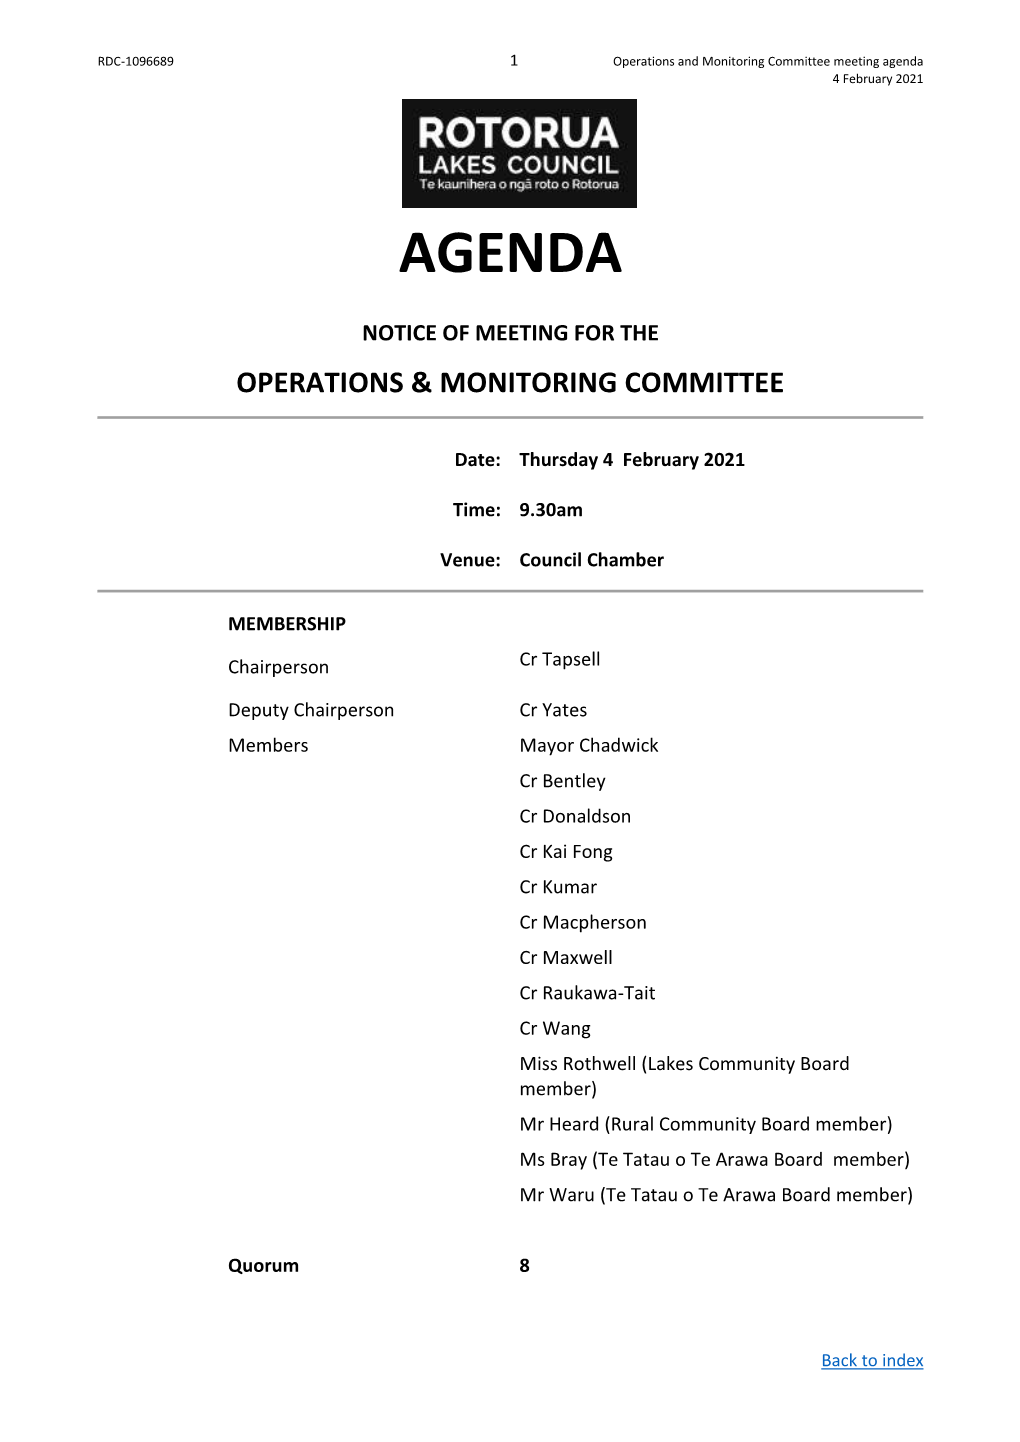 Meeting Agenda 4 February 2021